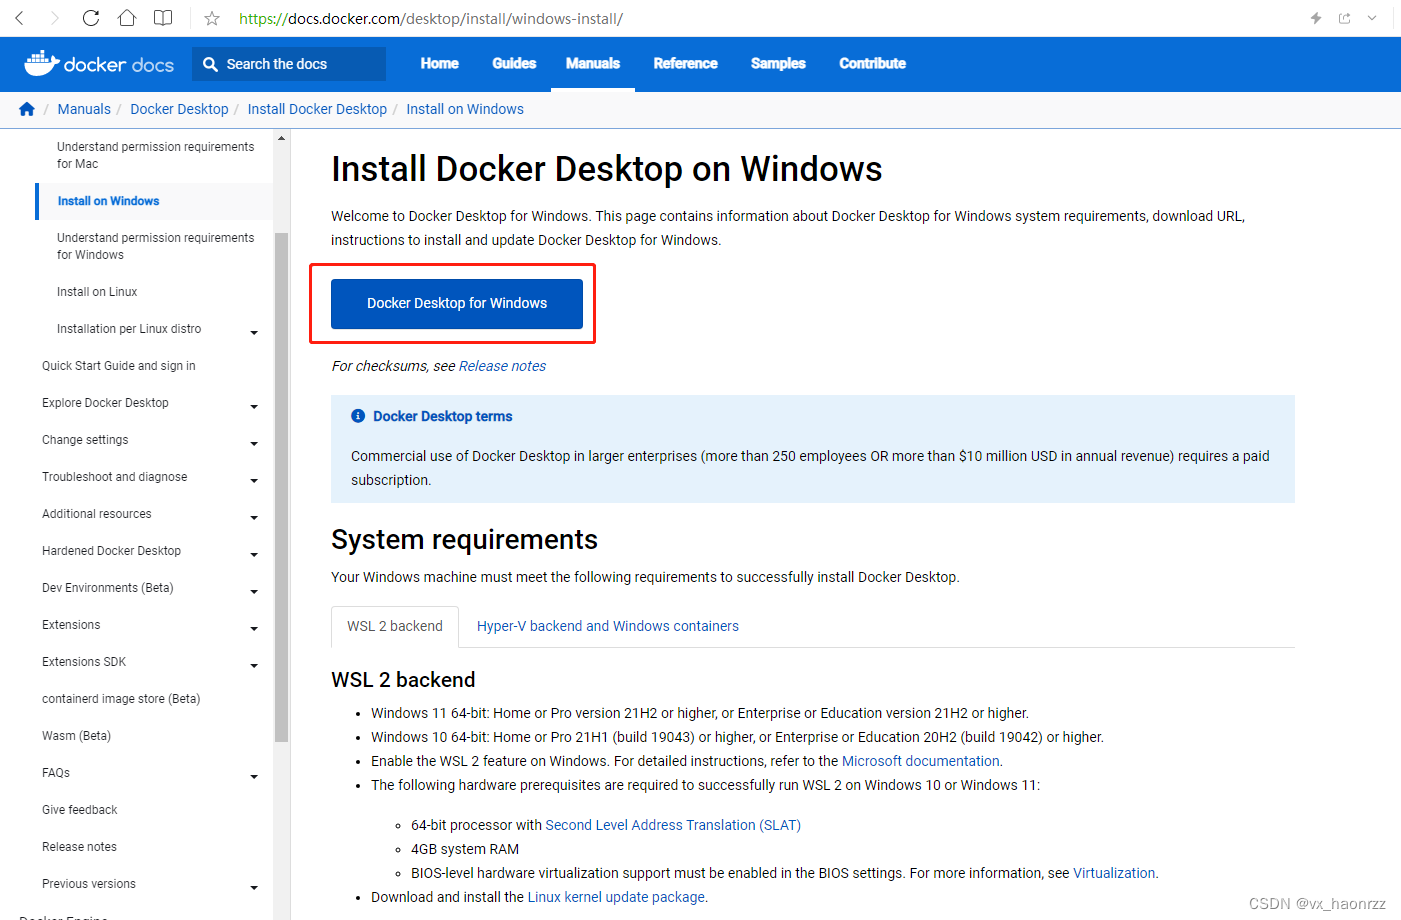 Visual Studio容器工具要求在构建，调试或运行容器化项目之前运行Docker